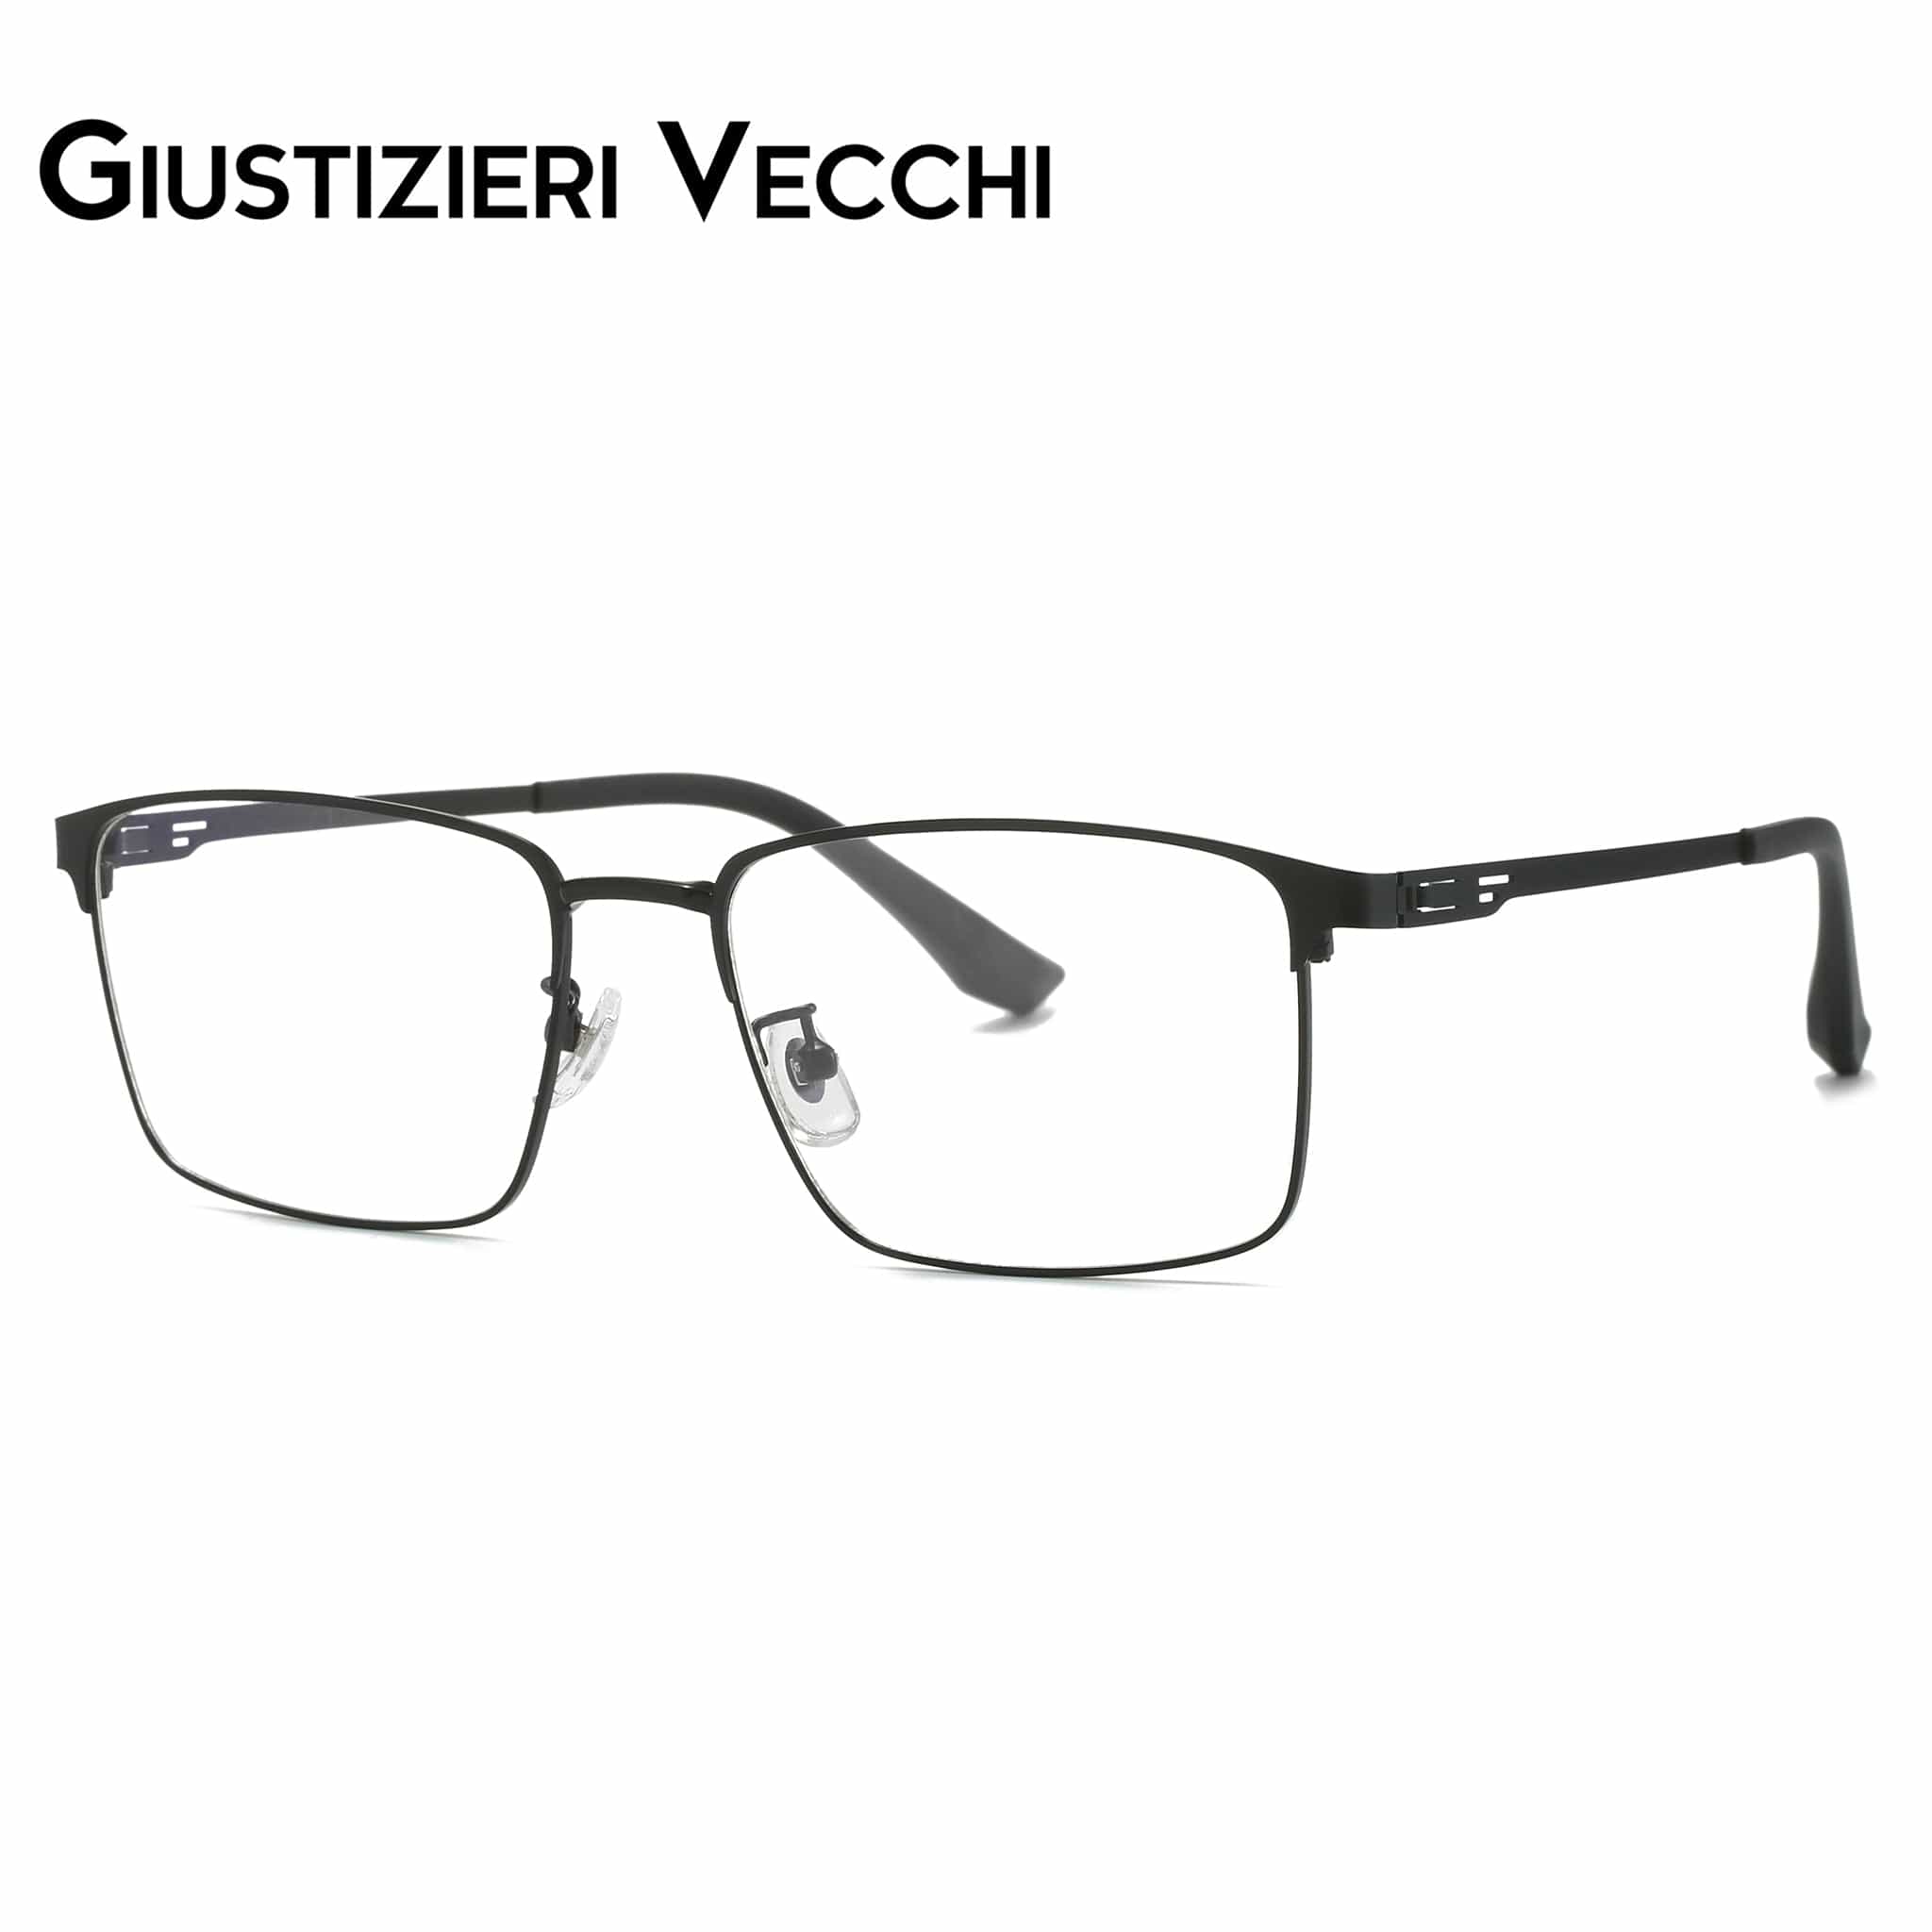 GIUSTIZIERI VECCHI Eyeglasses SkyRider Uno